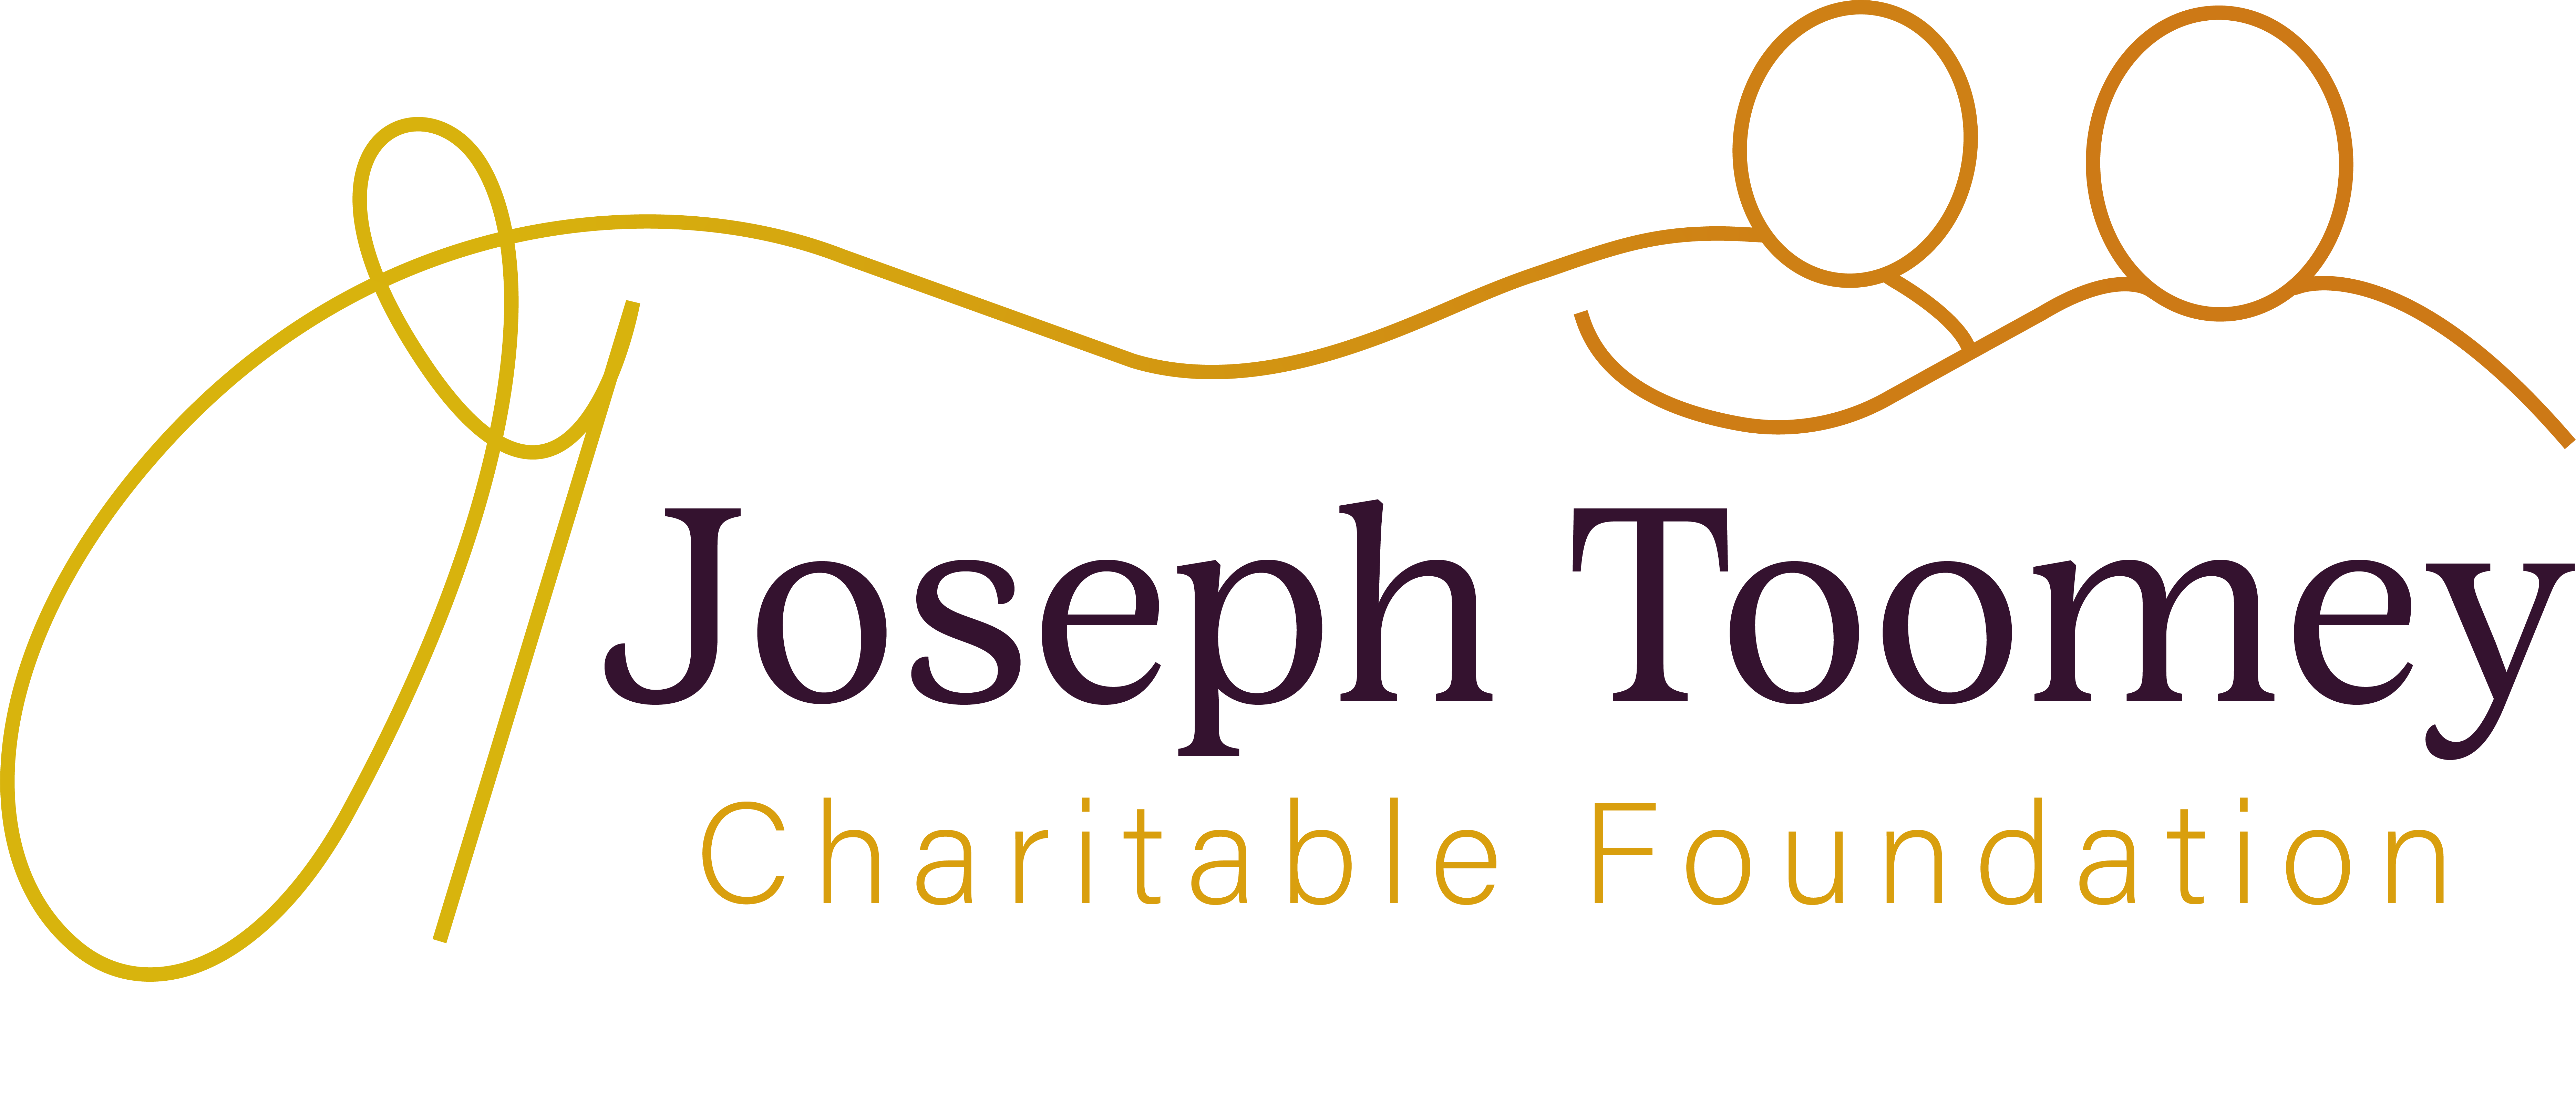 Joesph Toomey Charitable Foundation